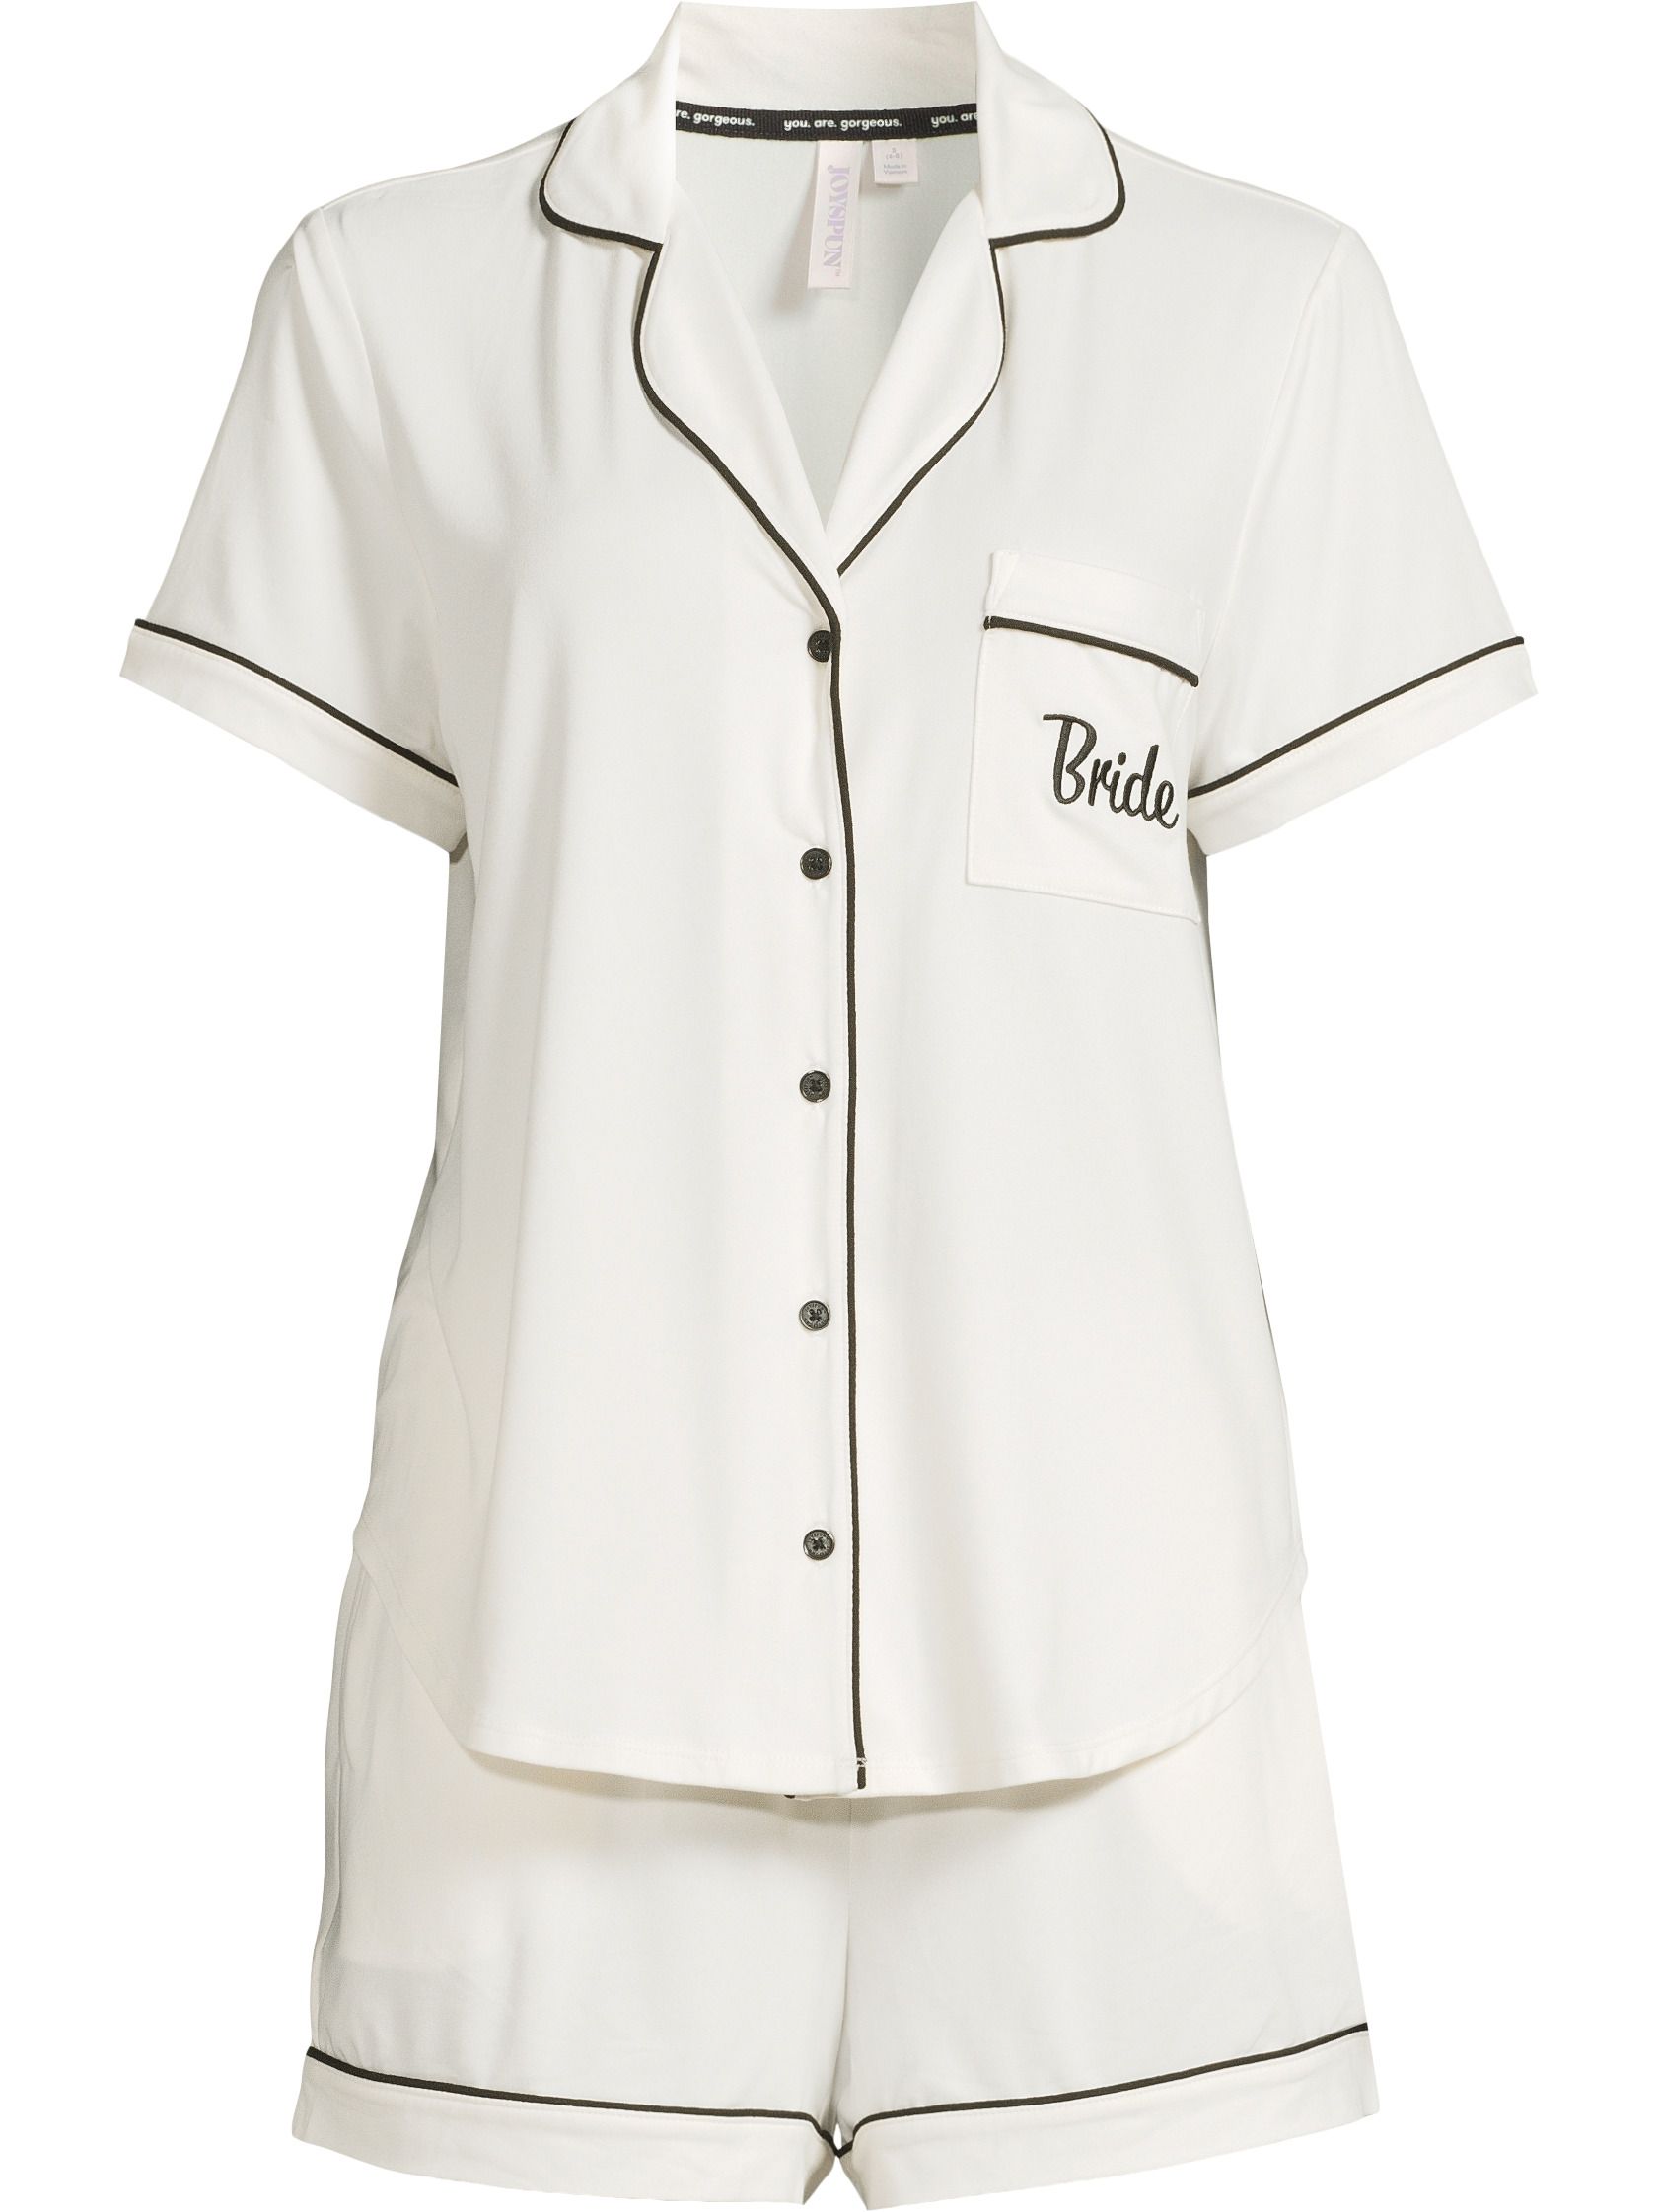 Joyspun Women's Bridal Notch Collar Top and Shorts Pajama Set, 2-Piece, Sizes XS to 3X | Walmart (US)